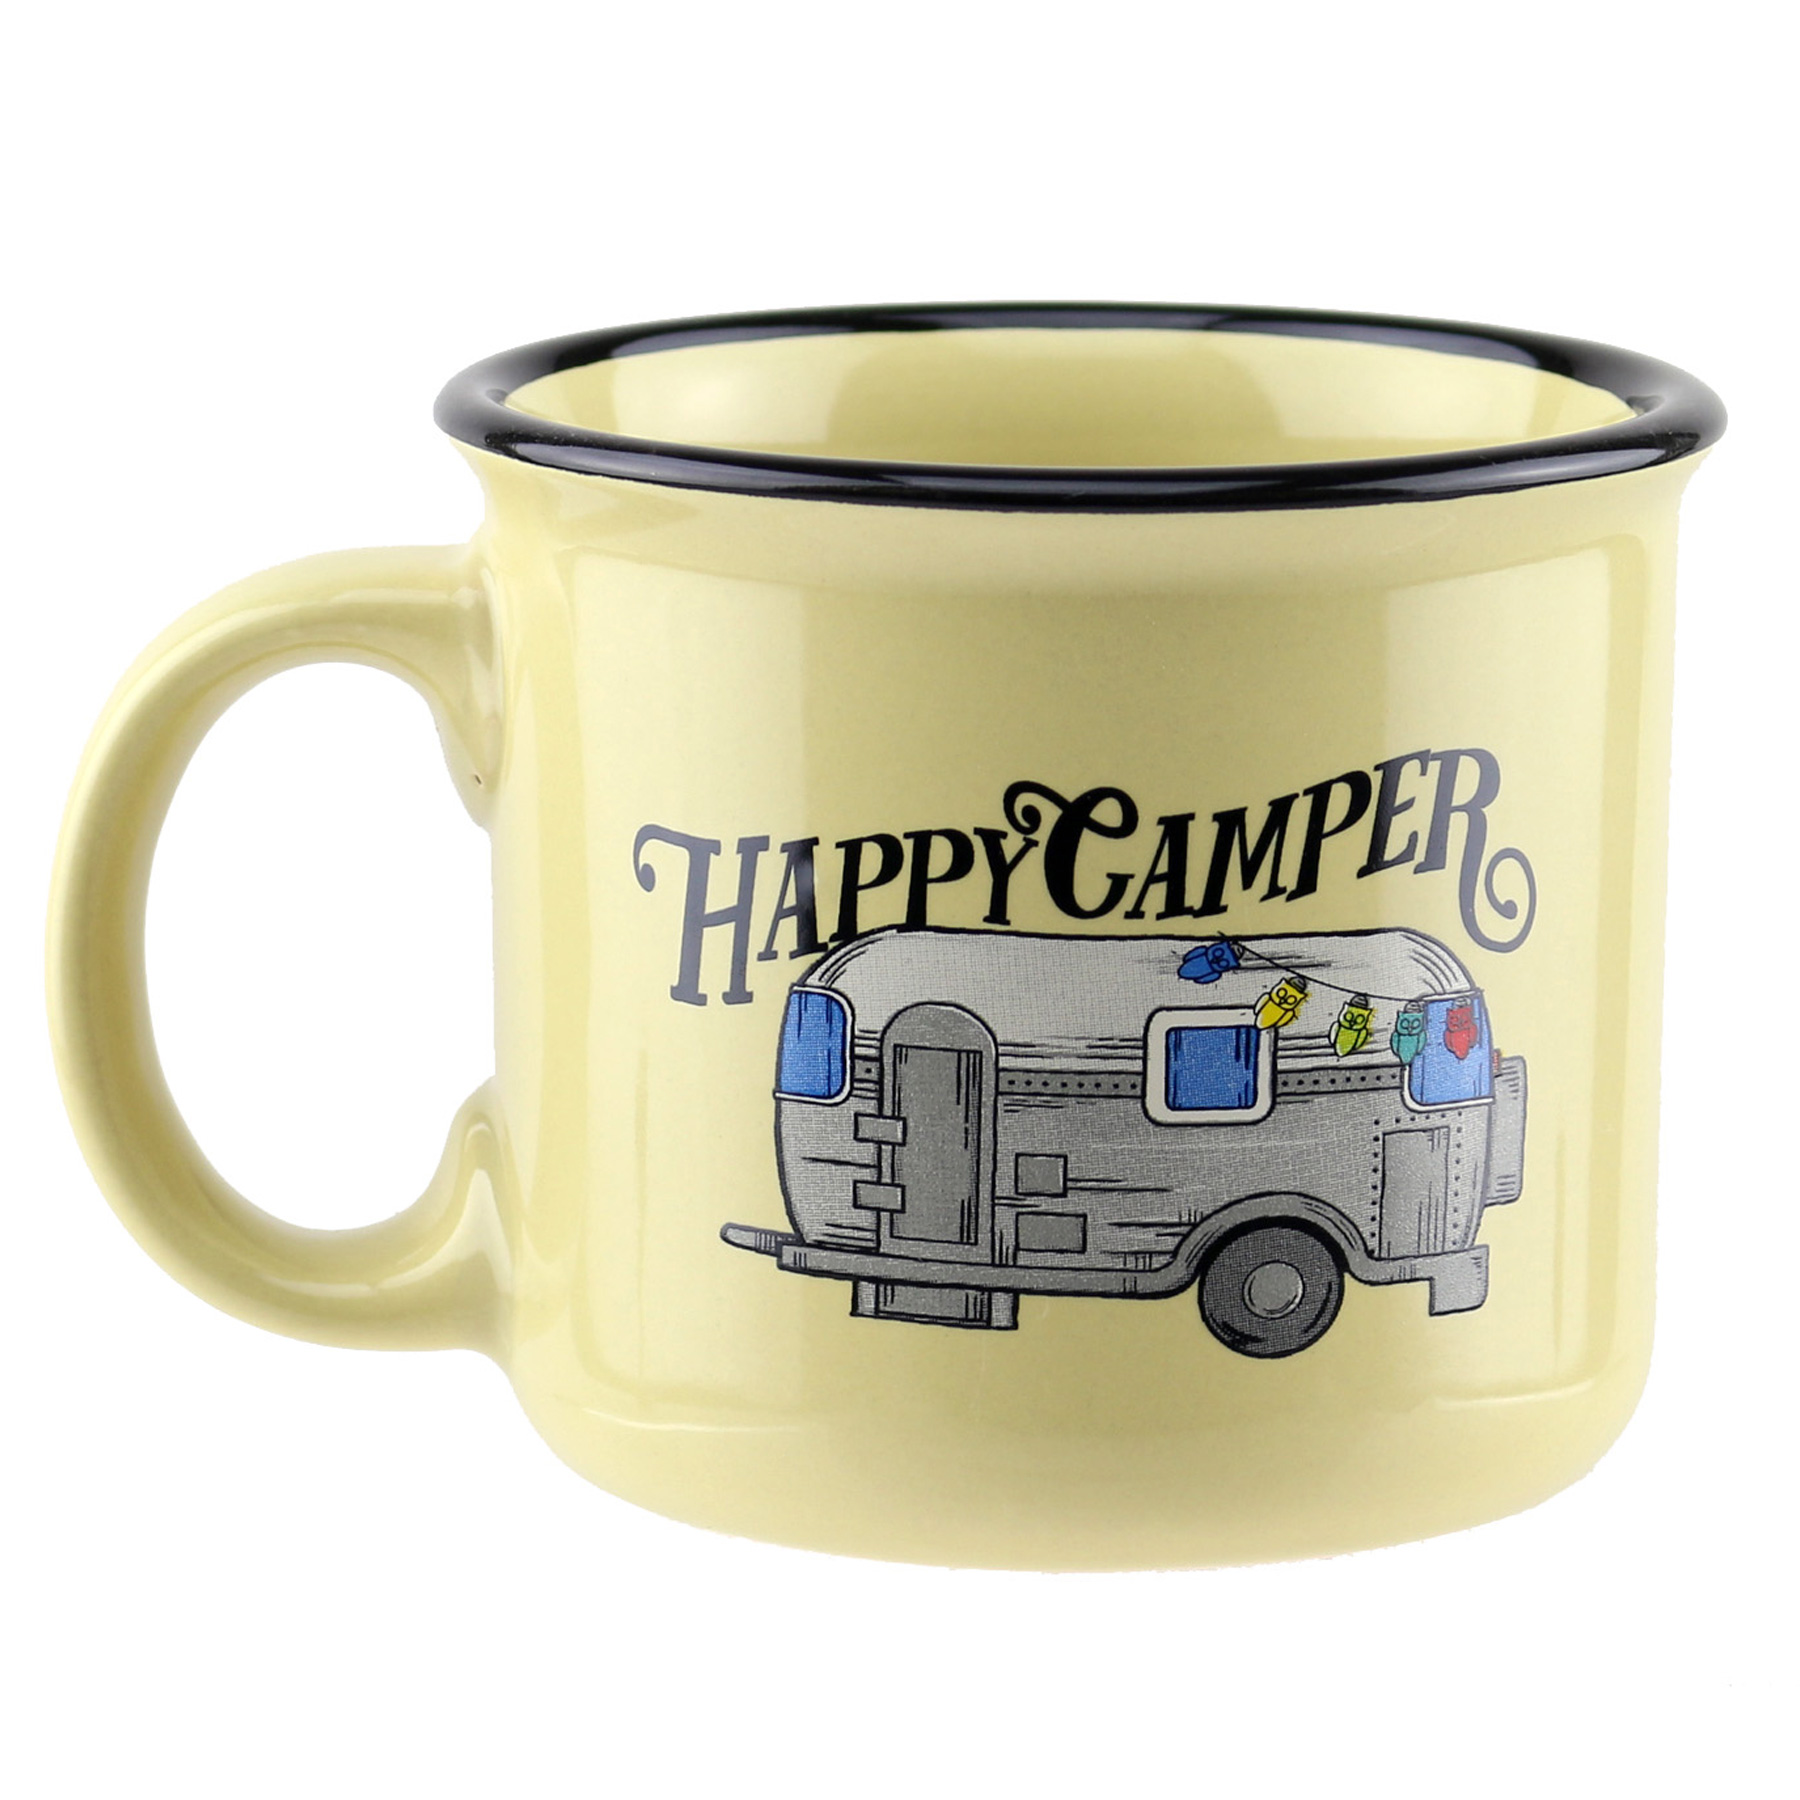 Happy Camper - Tent Camping - Engraved YETI Tumbler